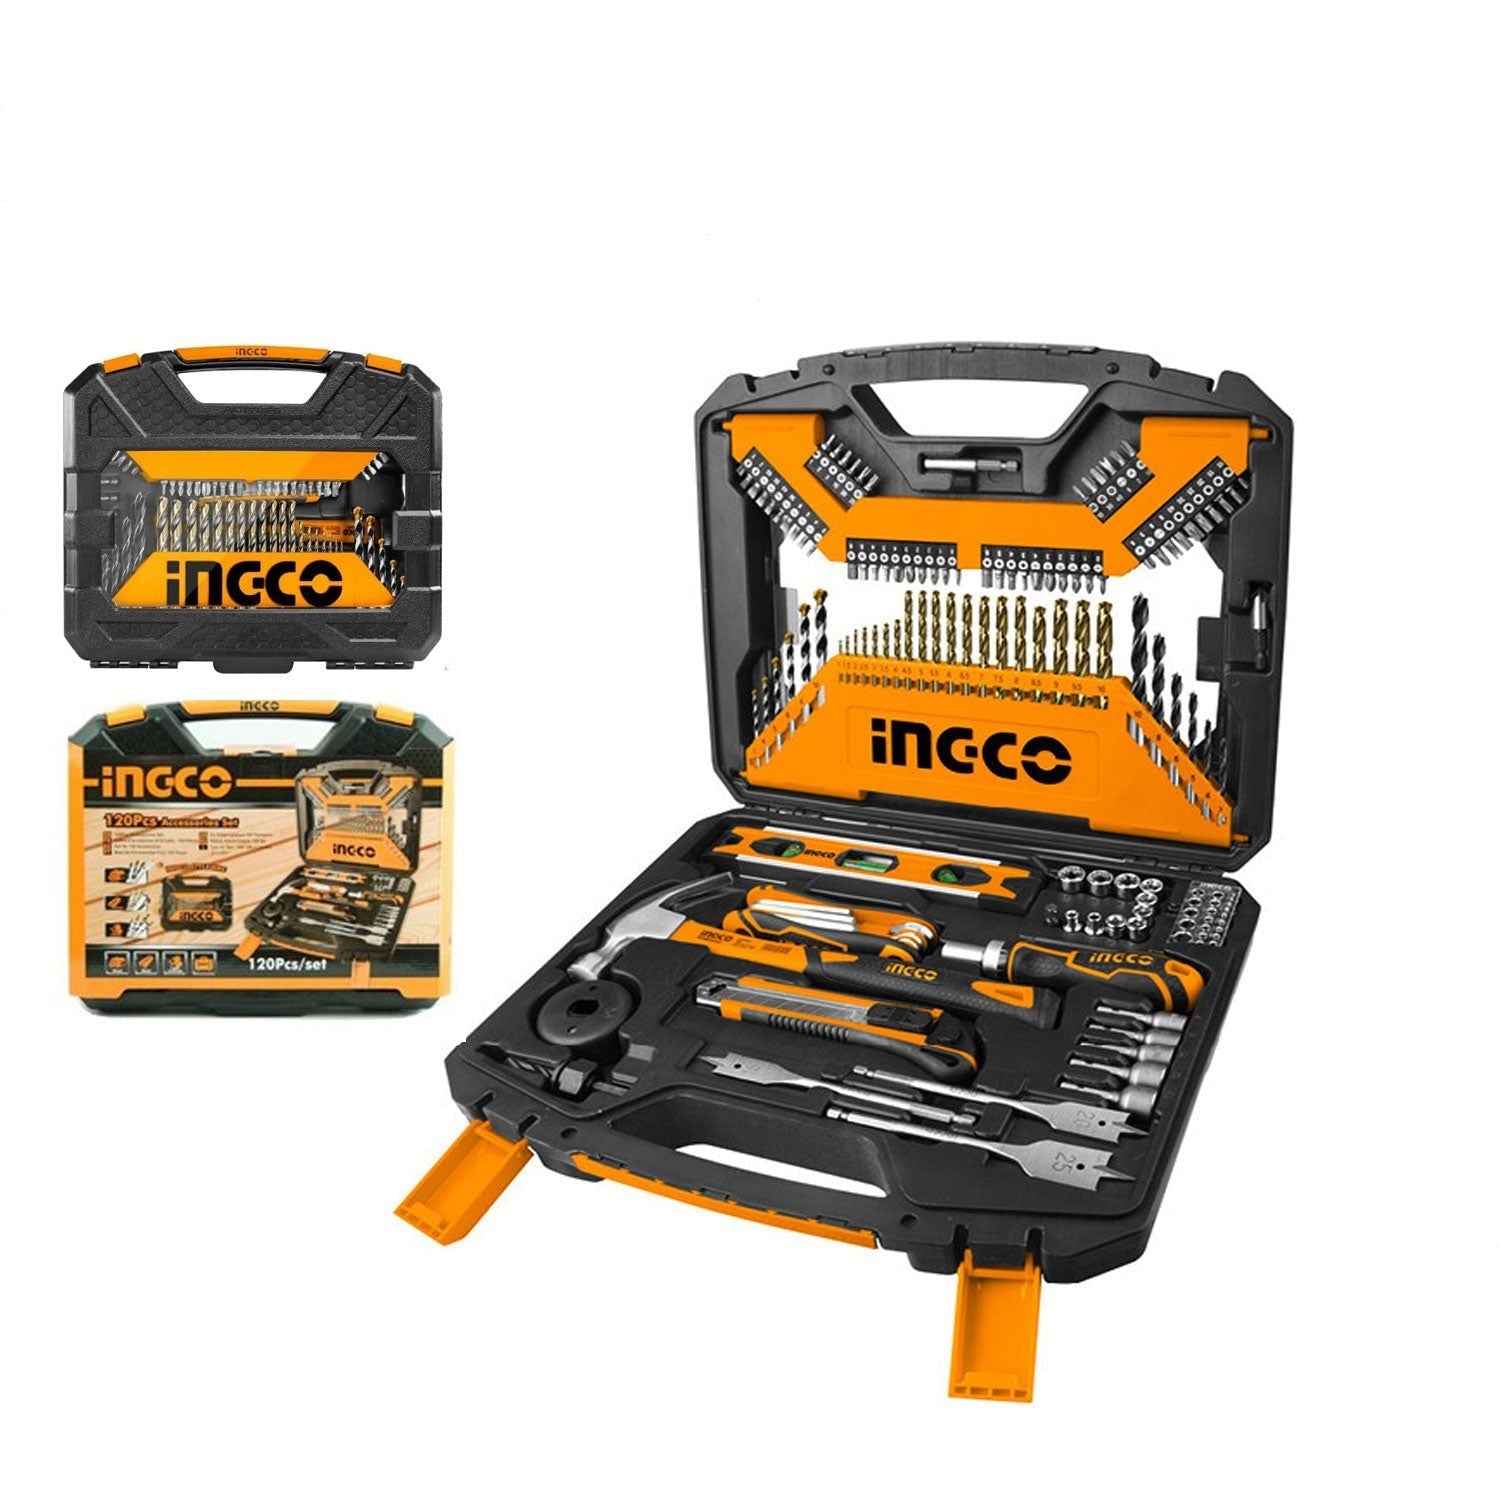 Ingco 120 Pcs Accessories Set - Masonry Drill Bits, HSS Twist Drill Bits, Wood Twist Drill Bits, Screwdriver Bits - HKTAC011201 | Supply Master | Accra, Ghana Drill Bits Buy Tools hardware Building materials